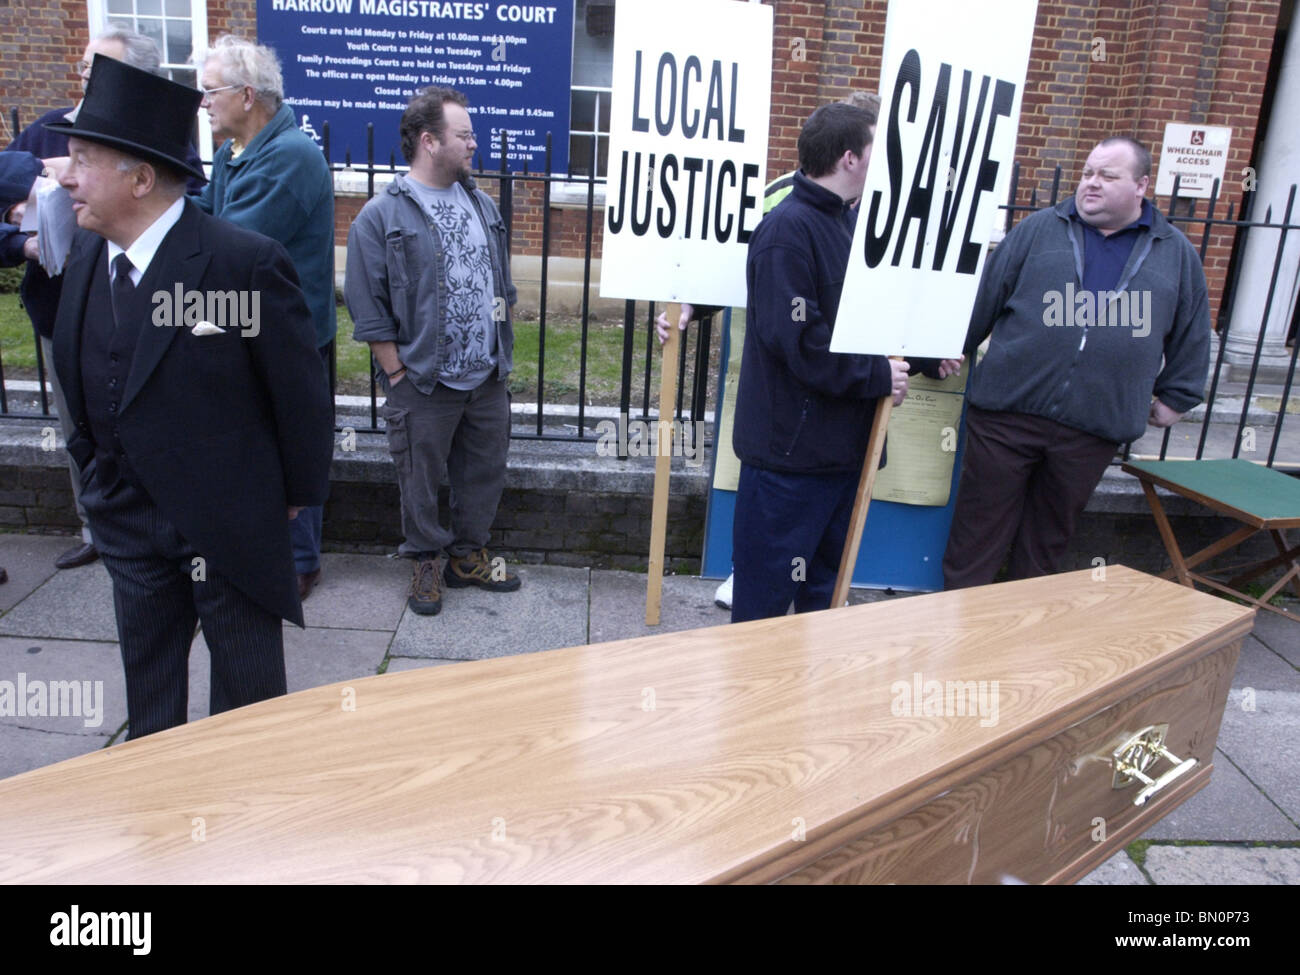 Harrow Magistrates Court den Tod des lokalen Justiz demo Stockfoto